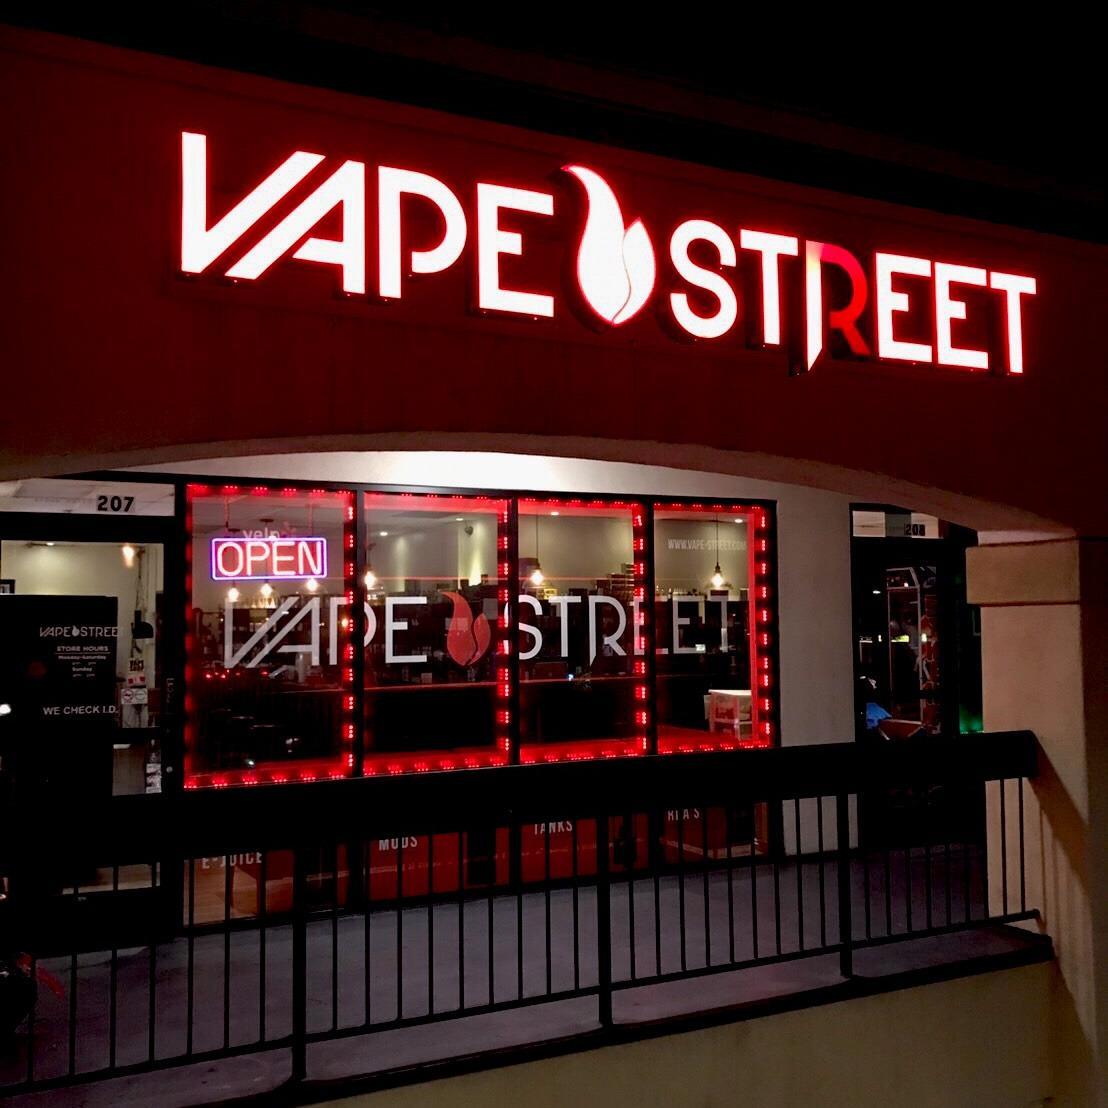 Tobacco Shops Near Me in Los Angeles, California | ShowMeLocal.com